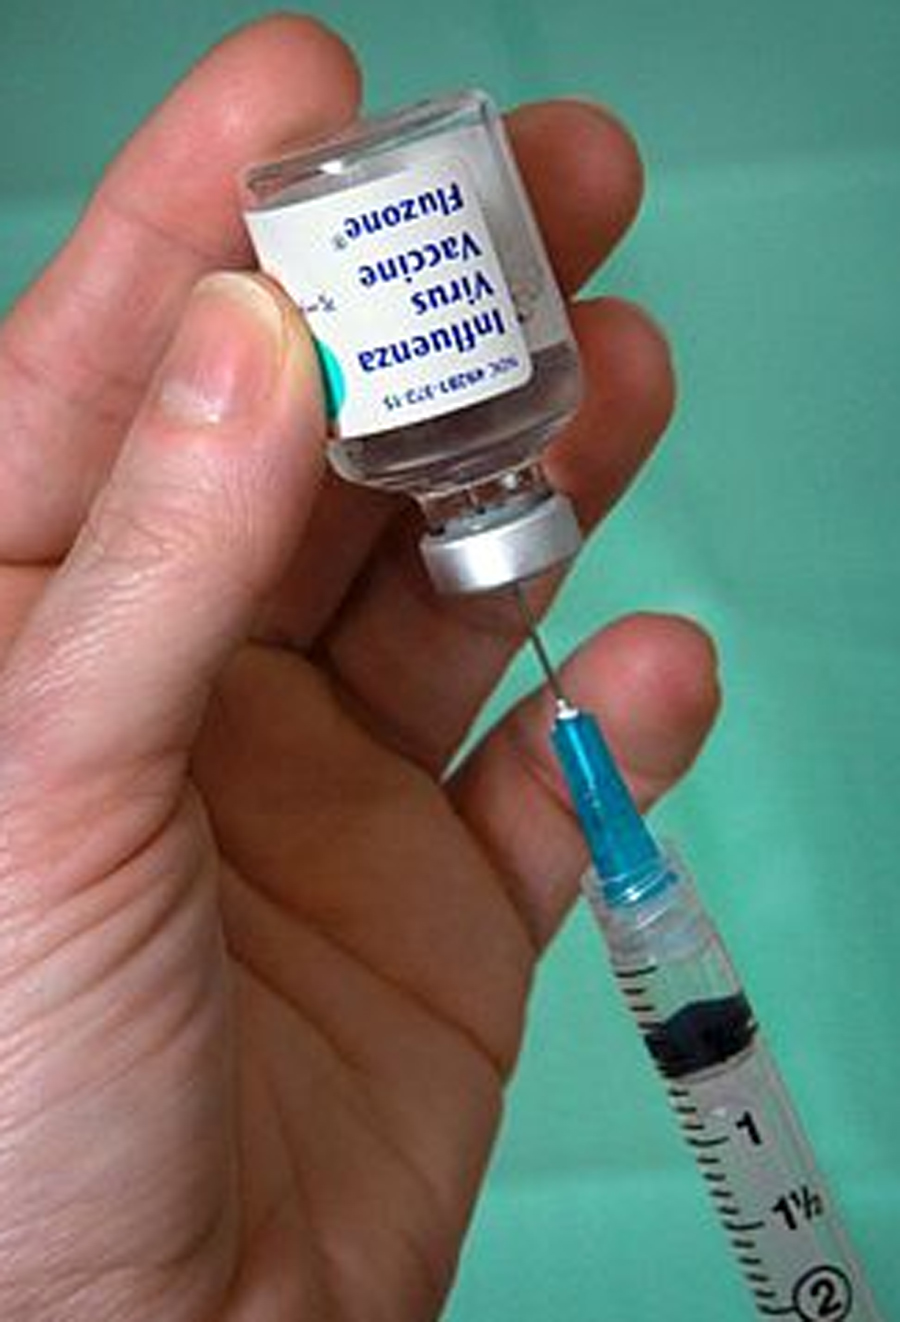 State, Vaccine, Open, Kasauli, Drug, Bathinda, Region